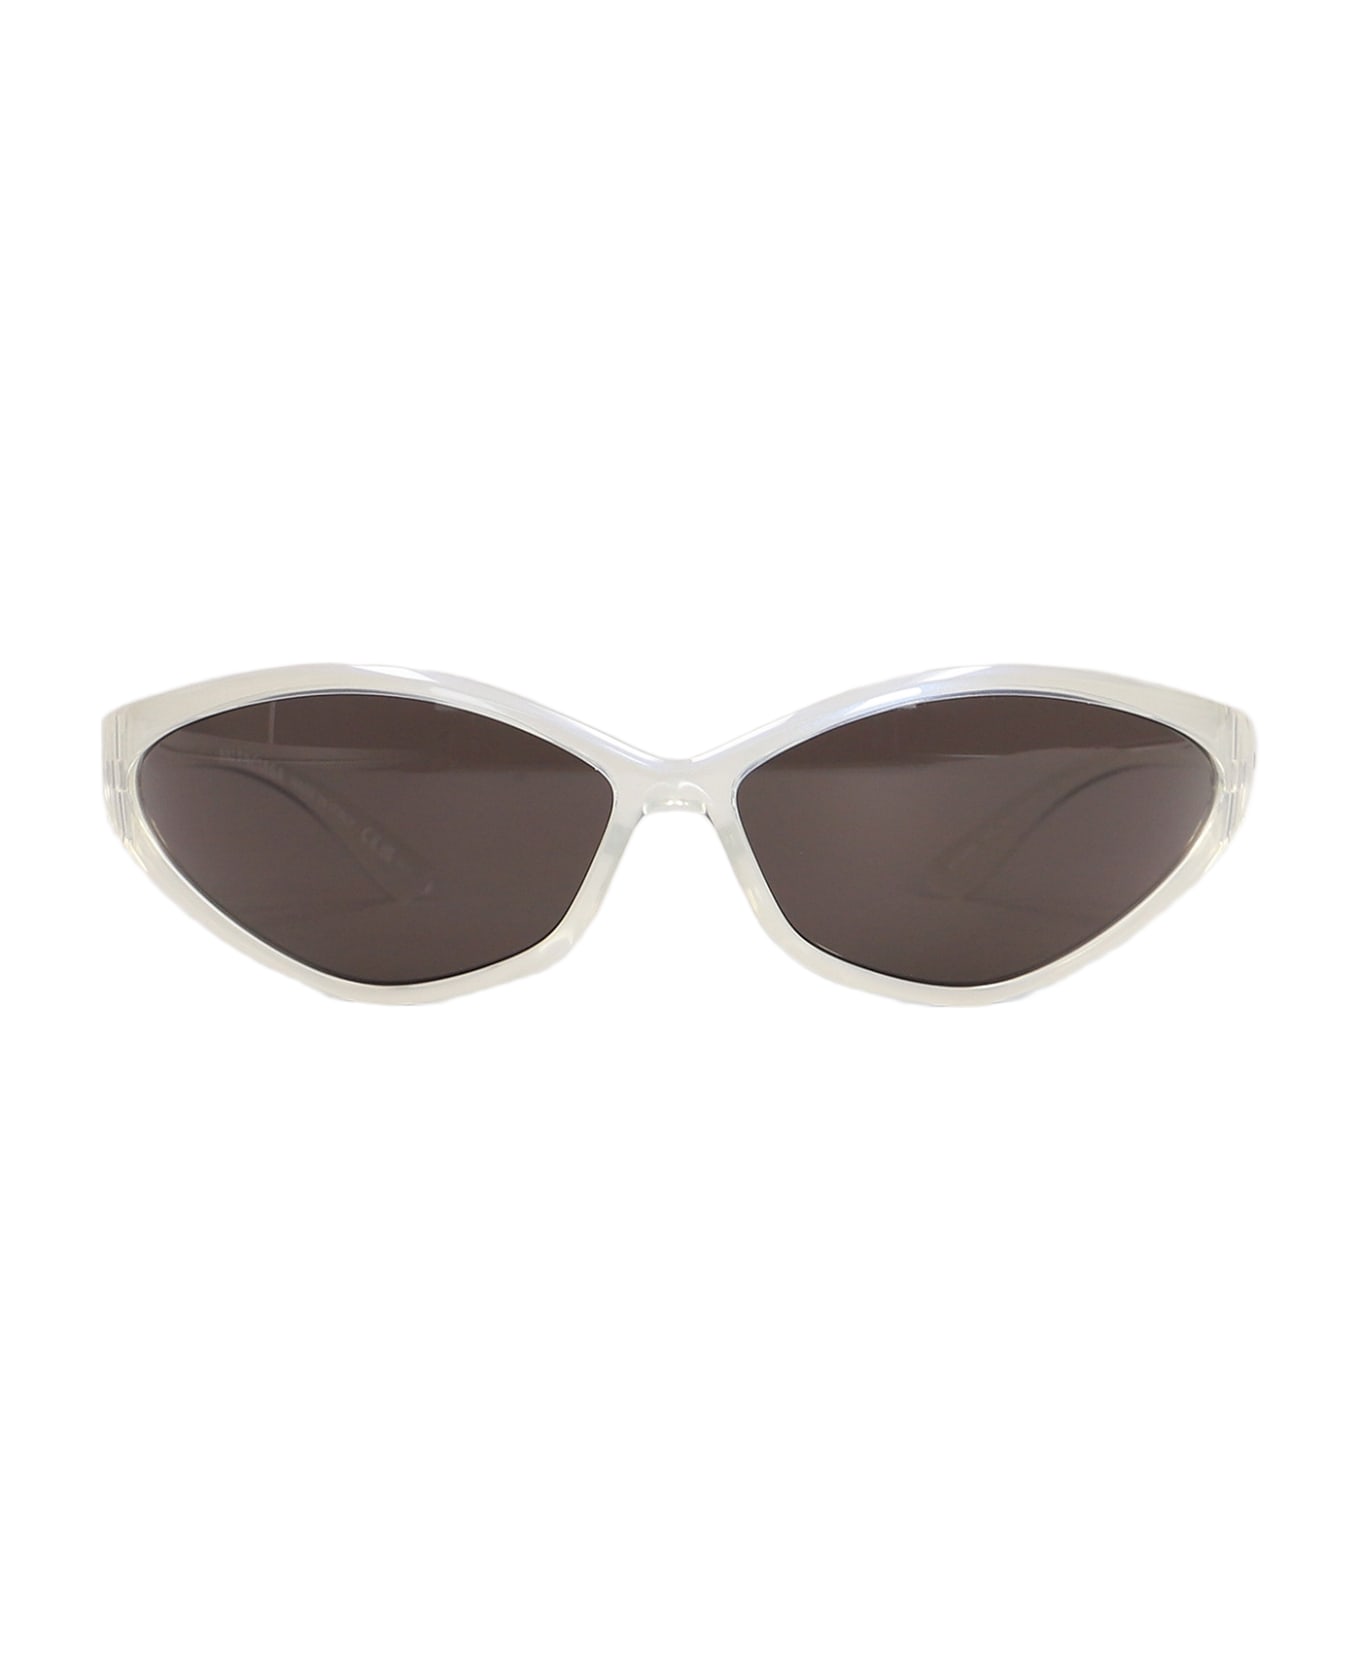 Balenciaga Eyewear Oval Sunglasses With Engraved Logo - silver